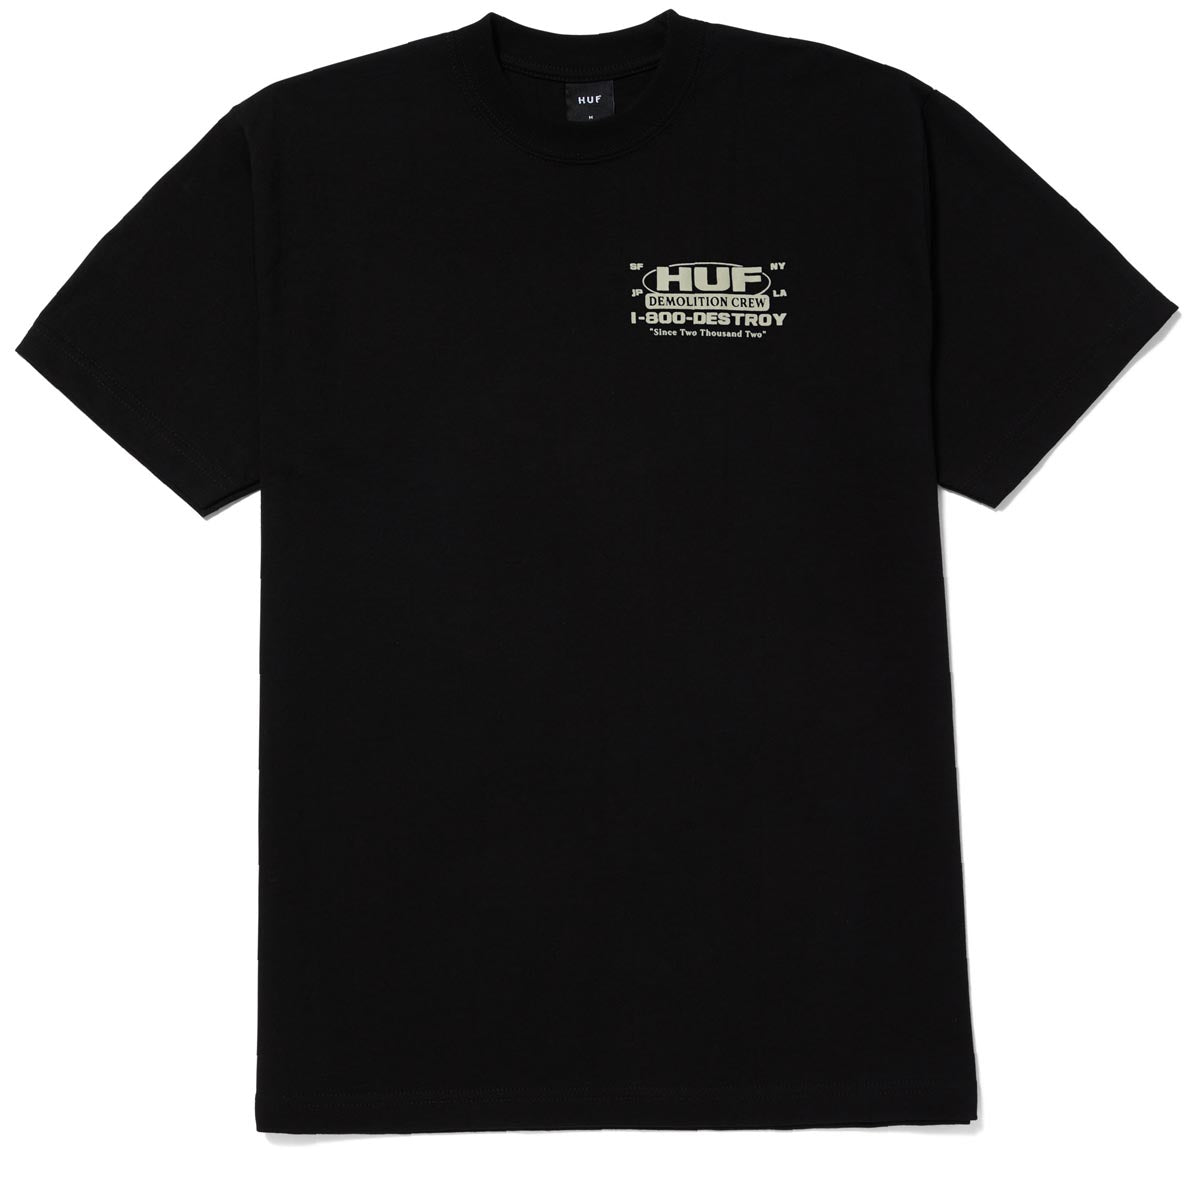 HUF Demolition Crew T-Shirt - Black image 2